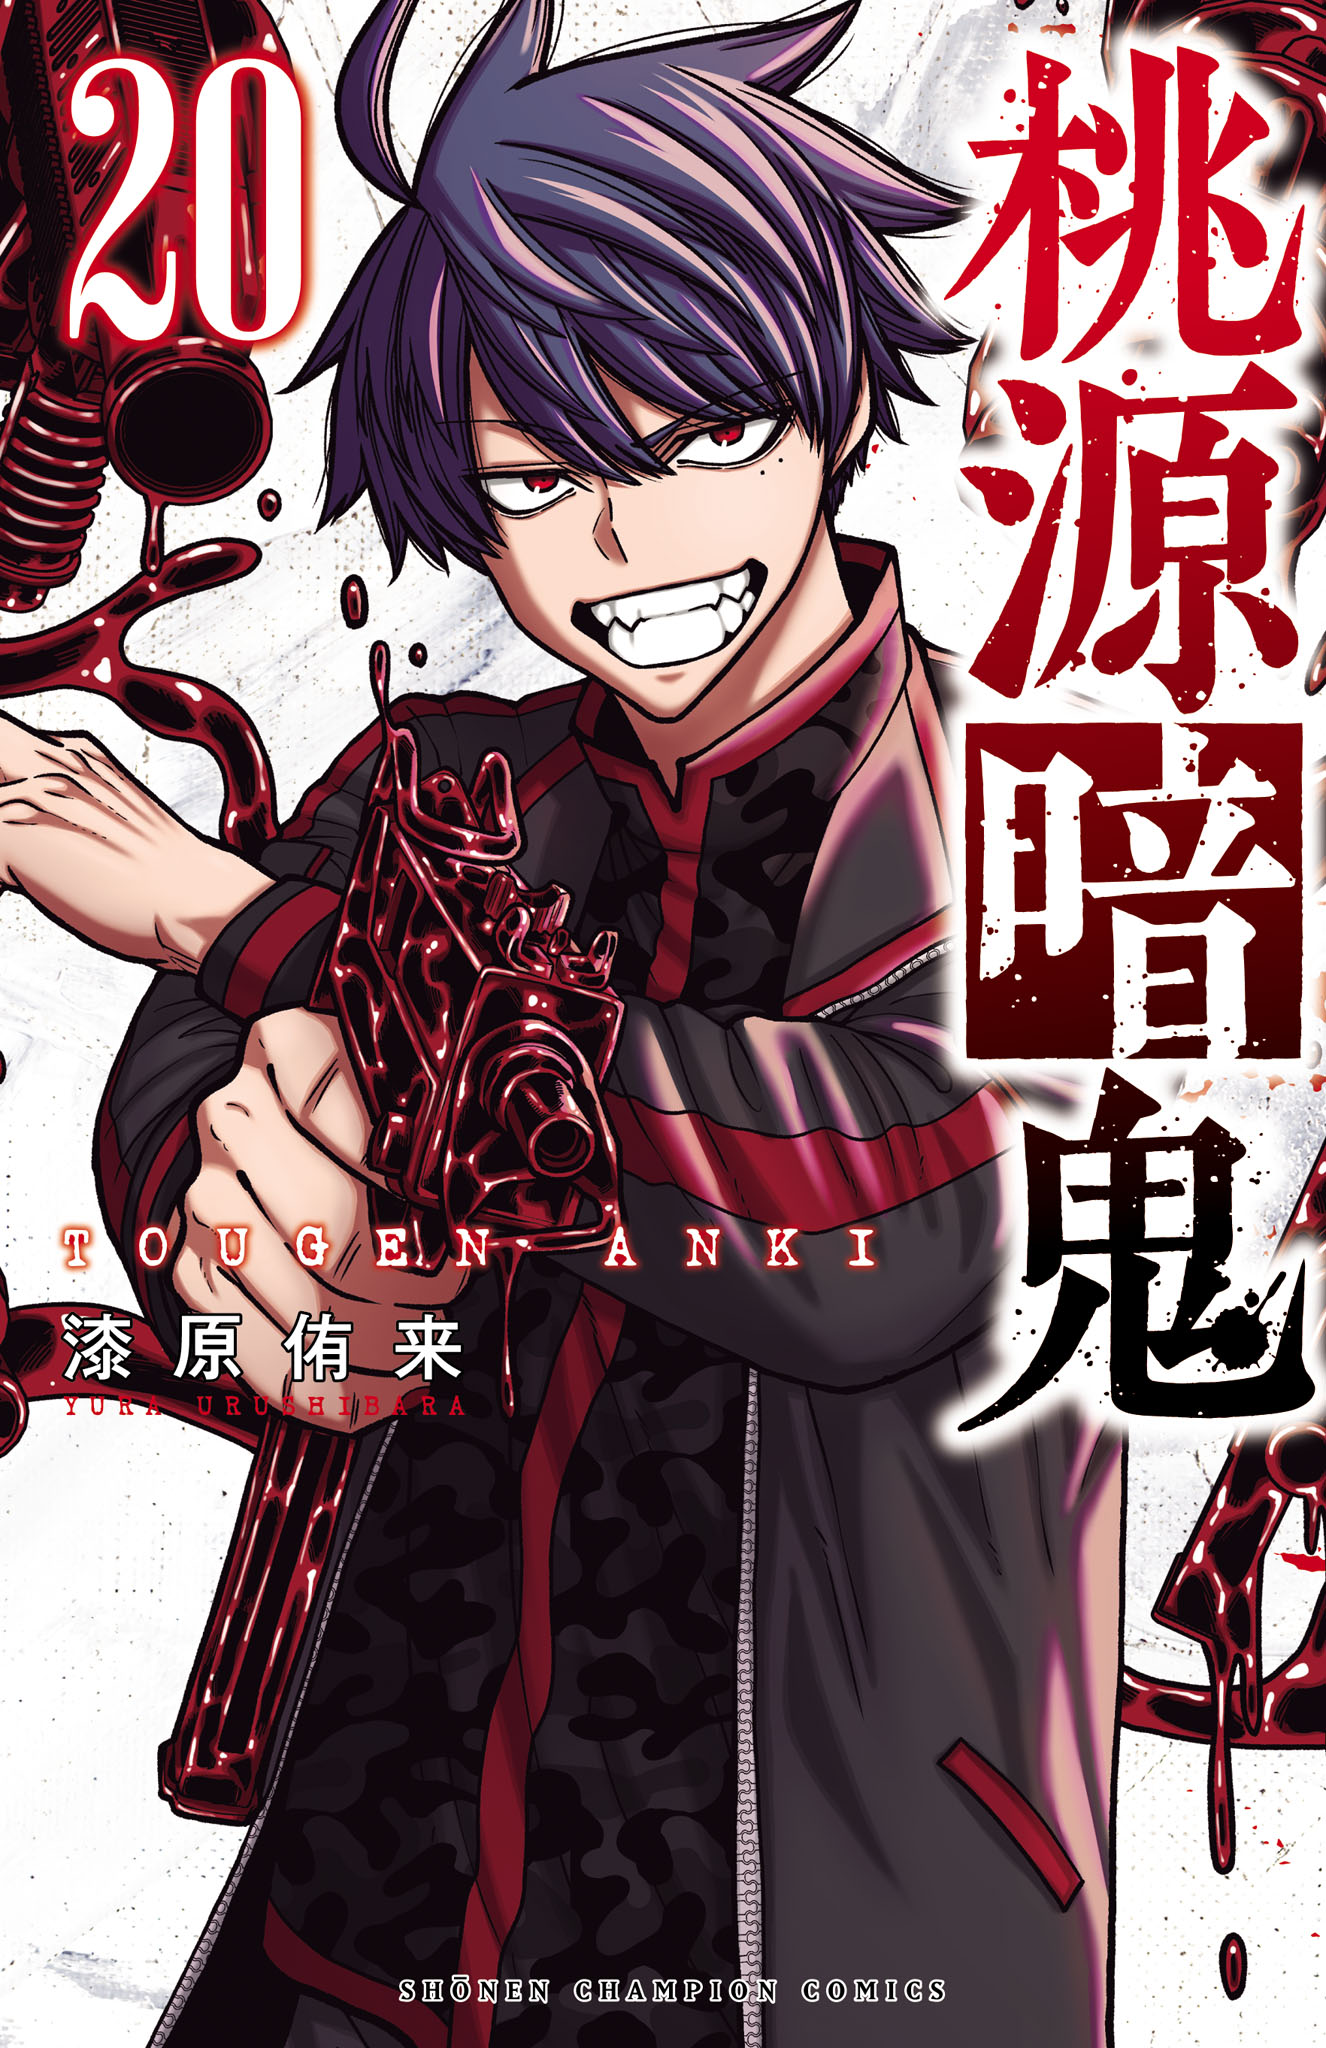 Tougen Anki Manga Cover Volume 20